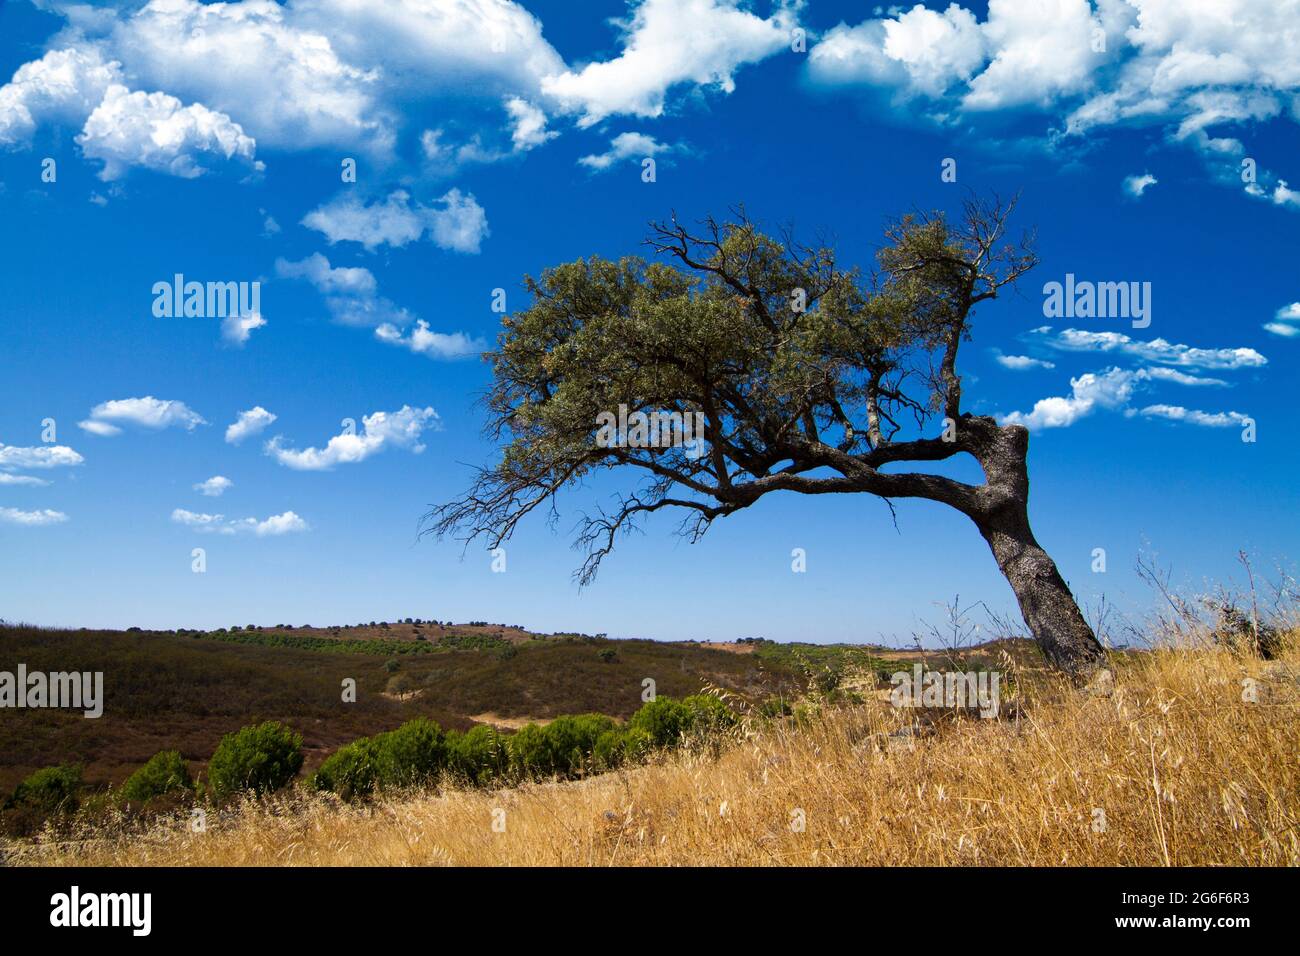 Vista sulla campagna all'interno Algarve con un albero solitario su una collina. Foto Stock